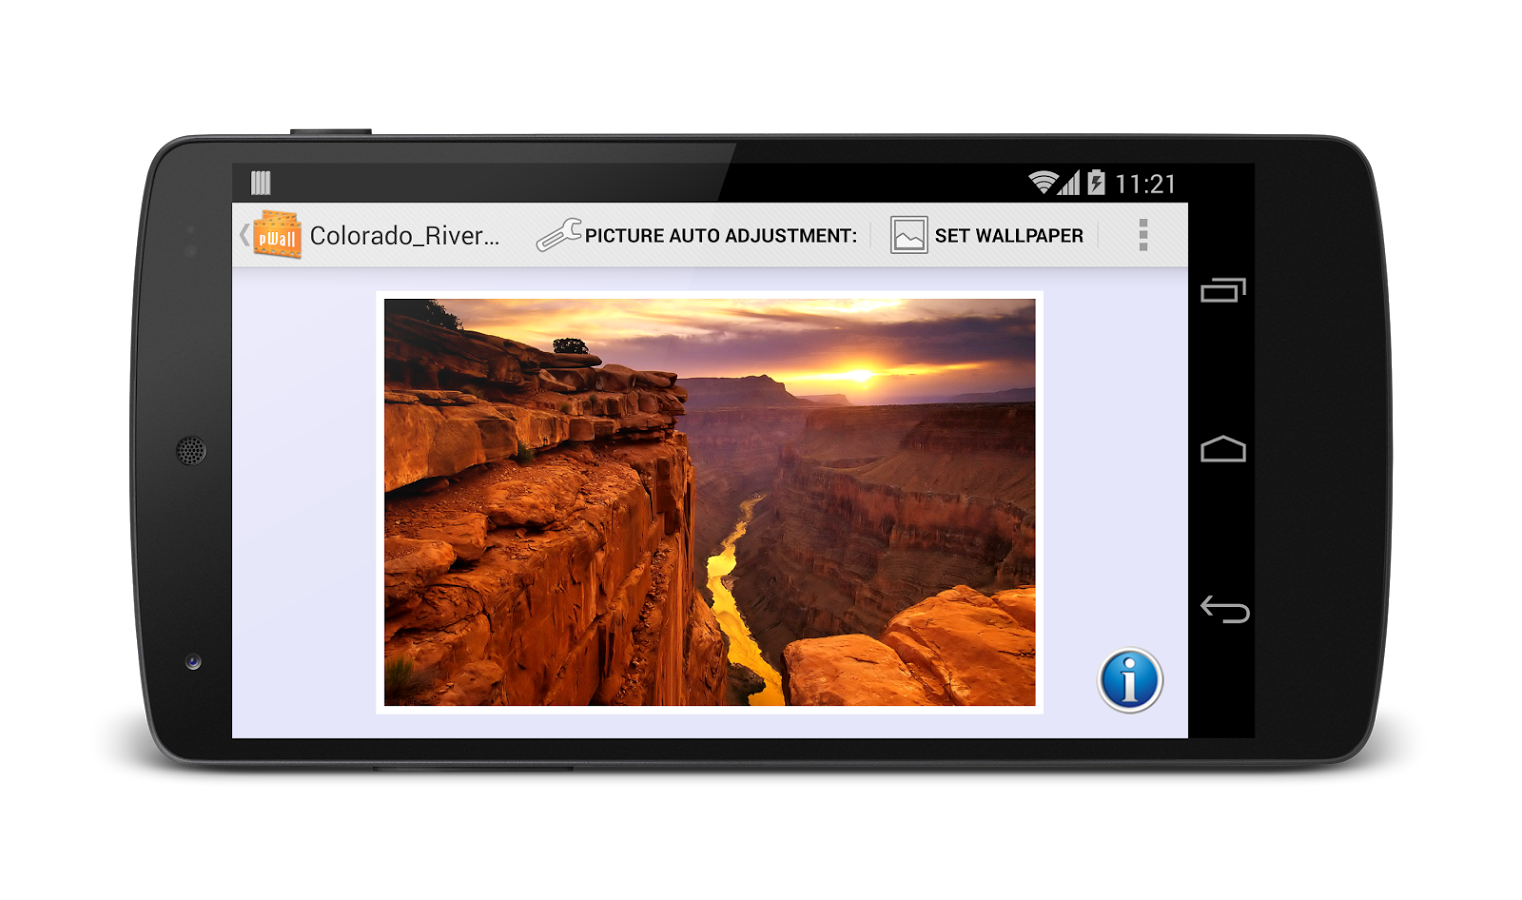 Photos Wallpaper Apk V4 Android P2p Releaselog Release Ru